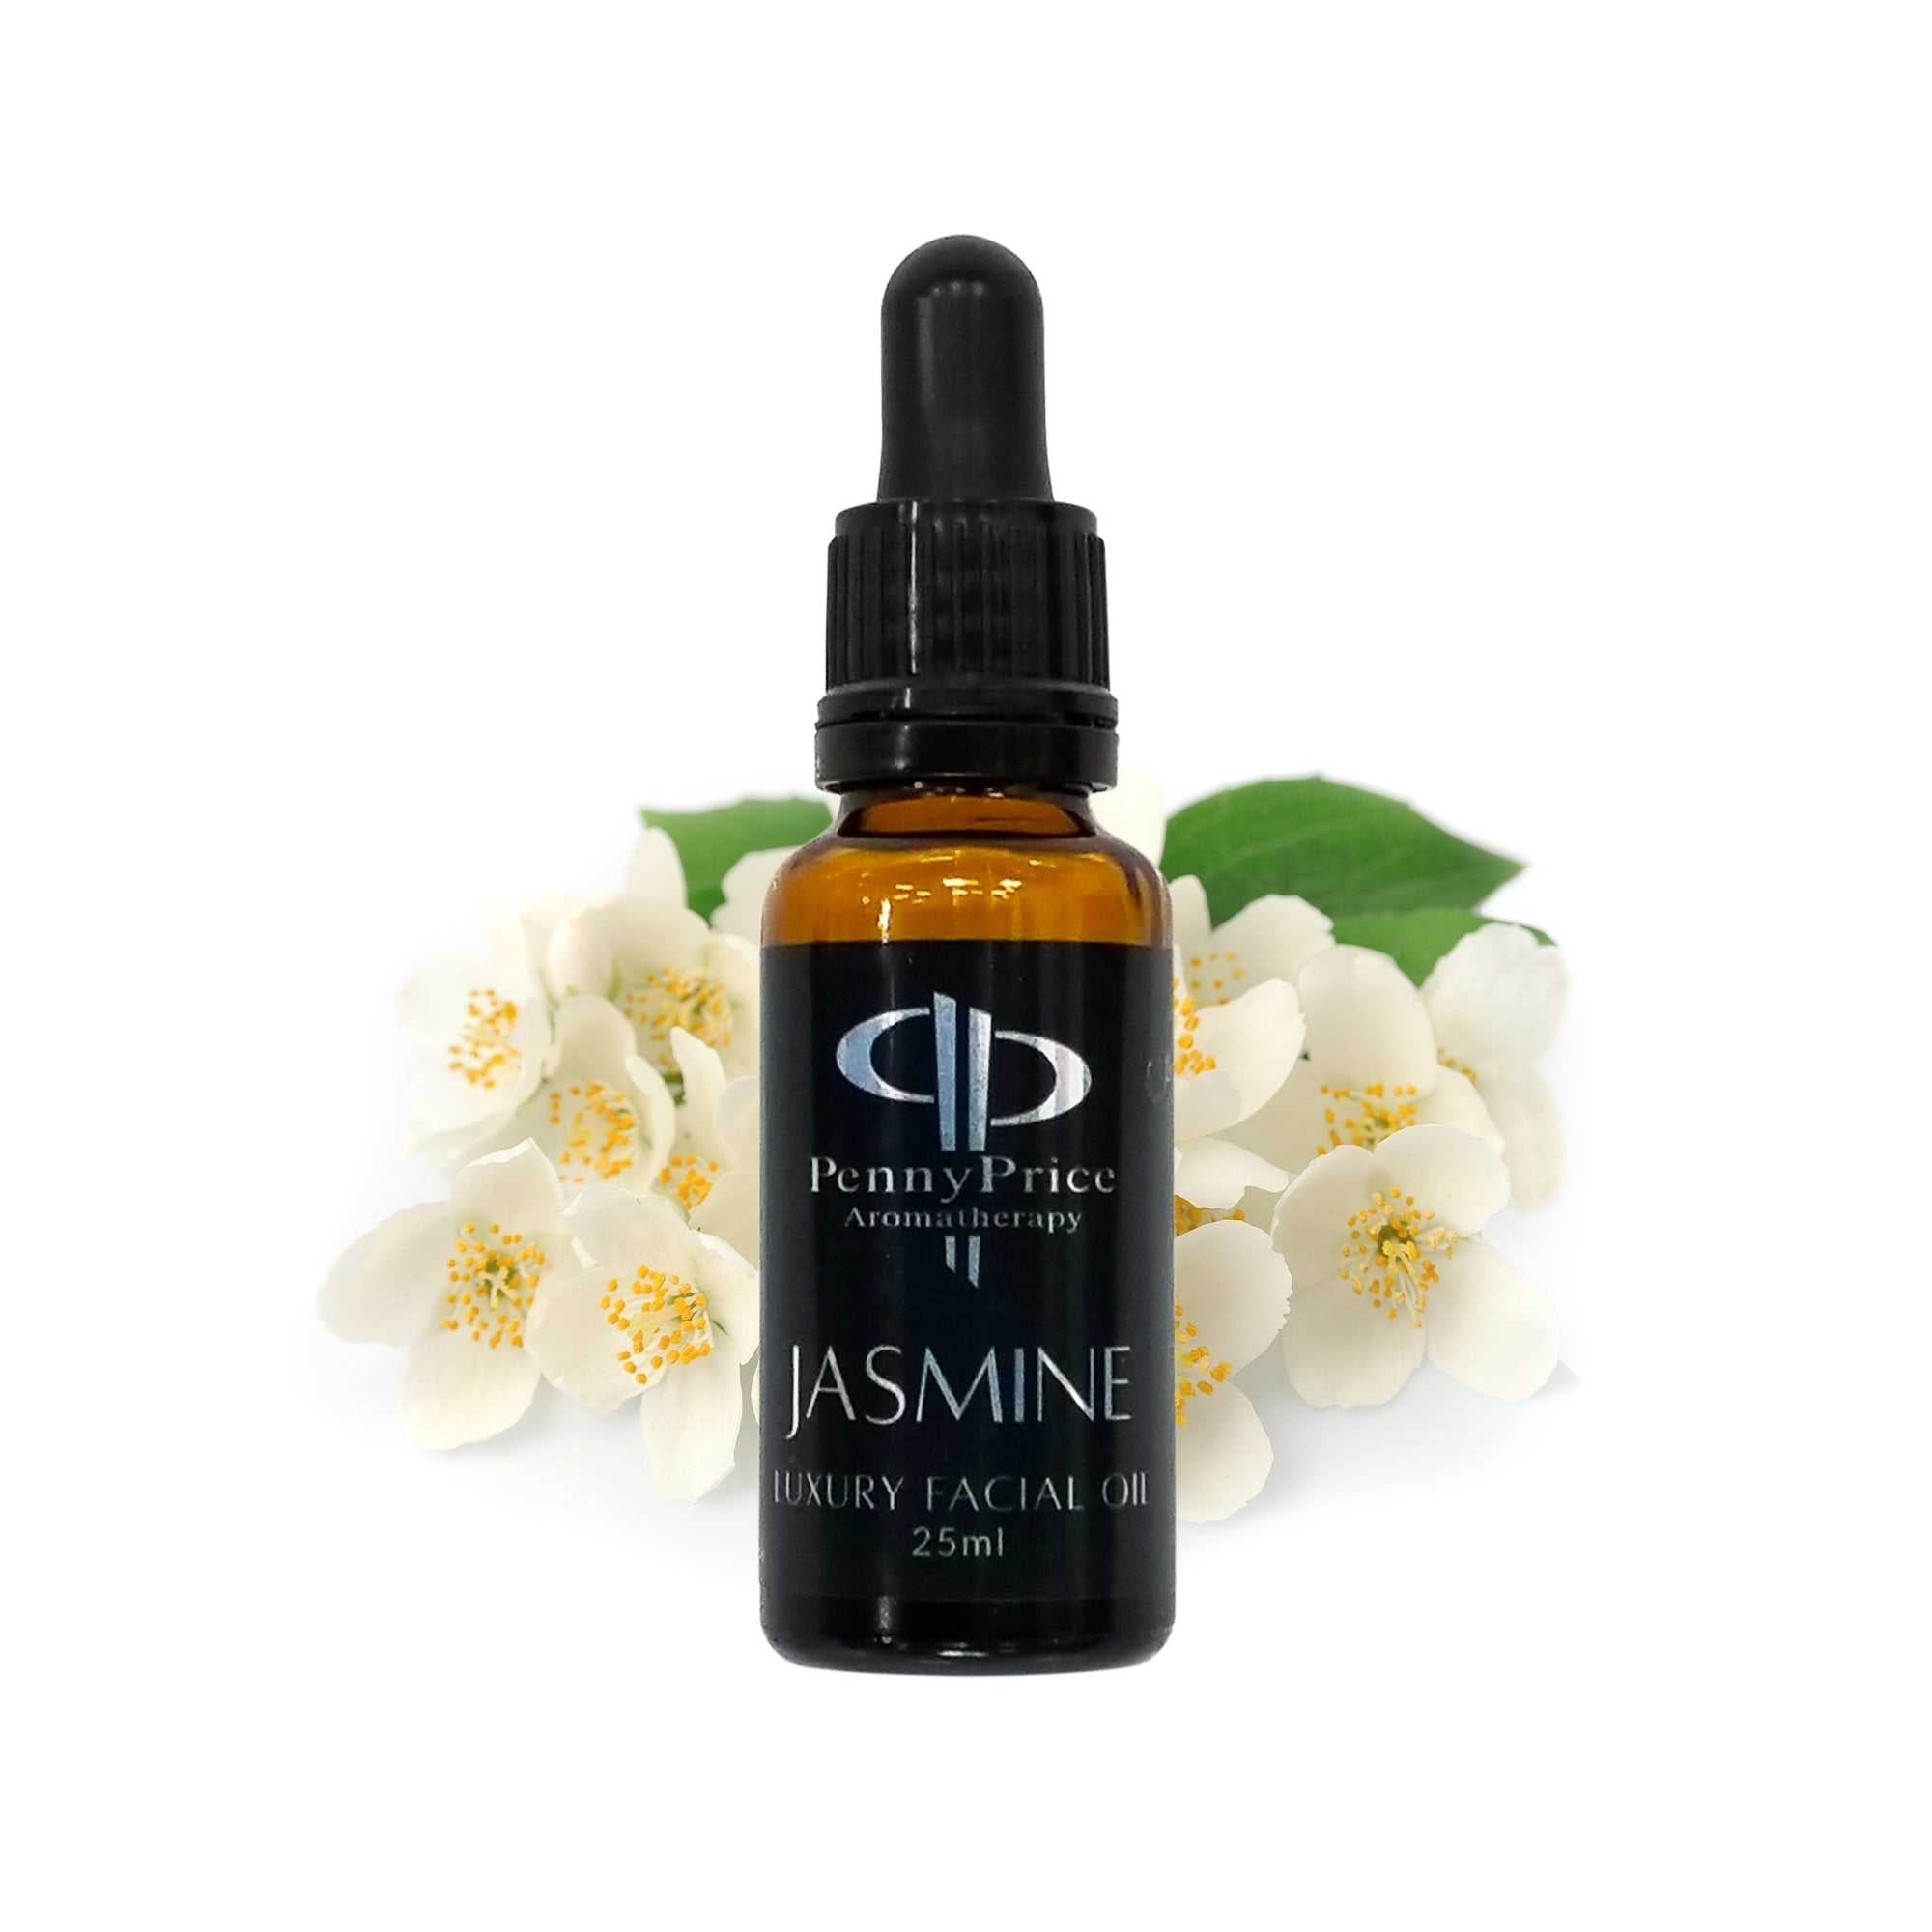 Jasmine Luxury Facial Oil with flower